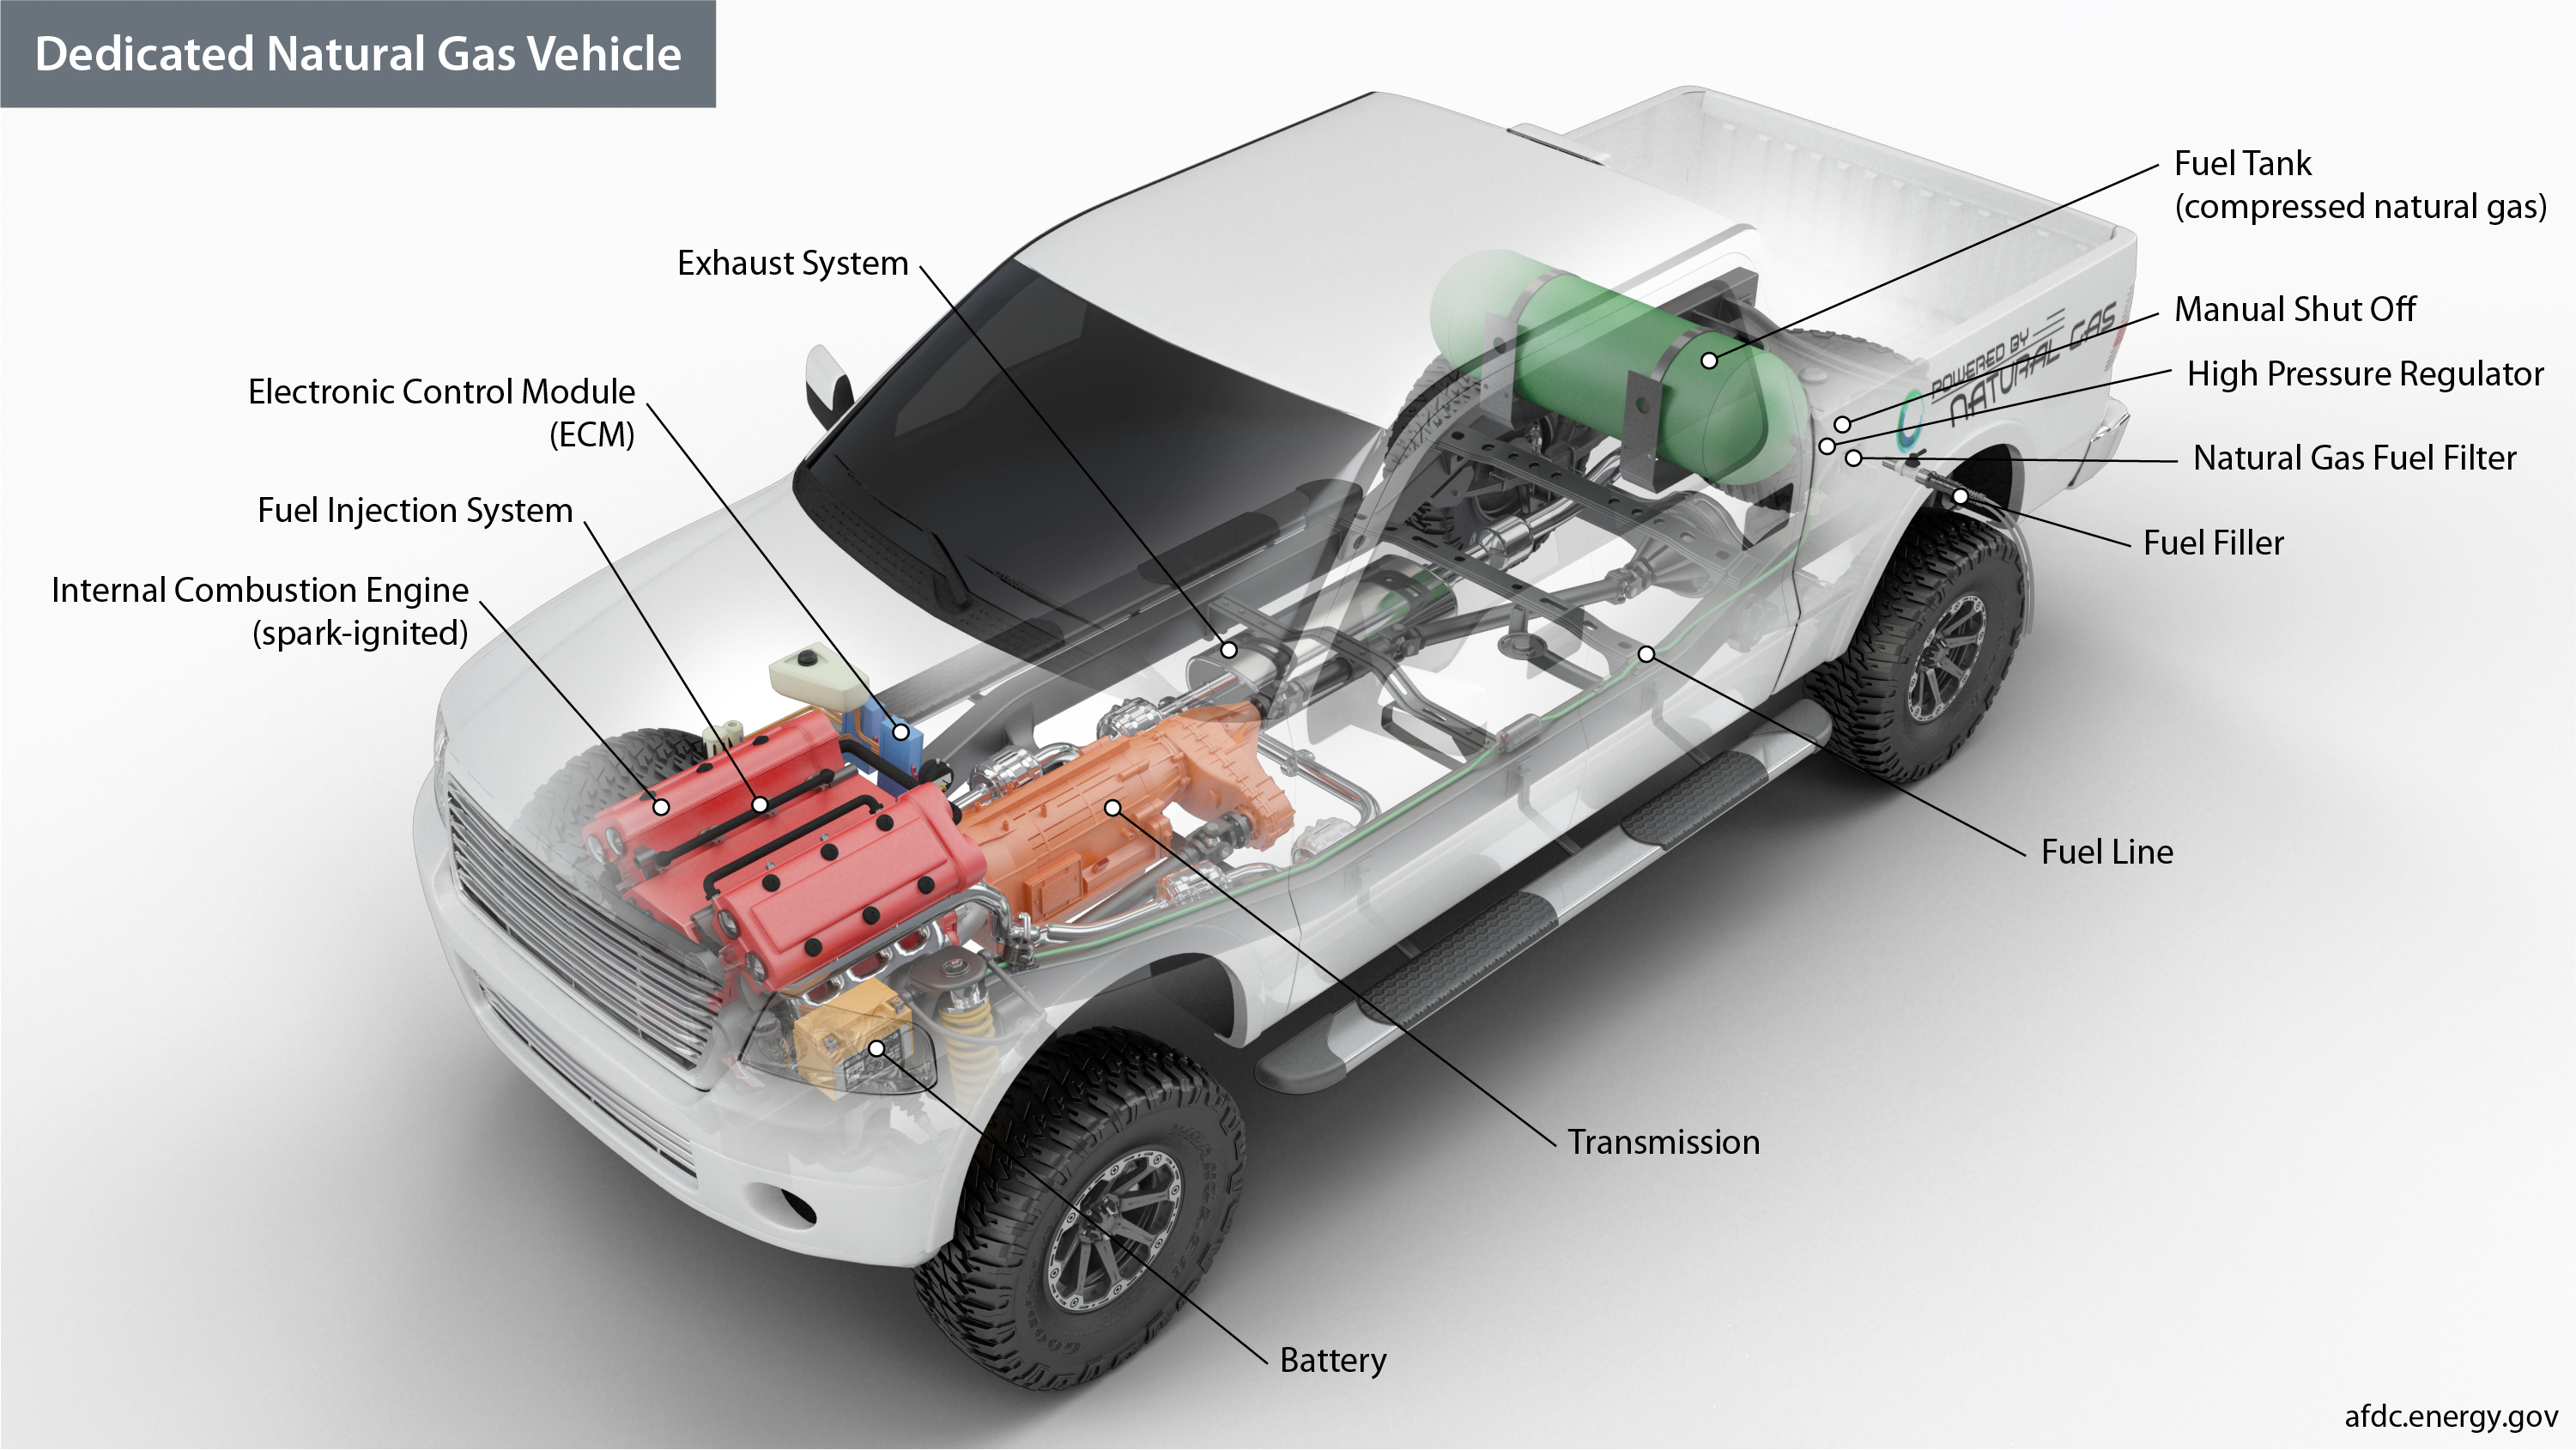 Alternative Fuels Data Center: How Do Natural Gas Vehicles Work?